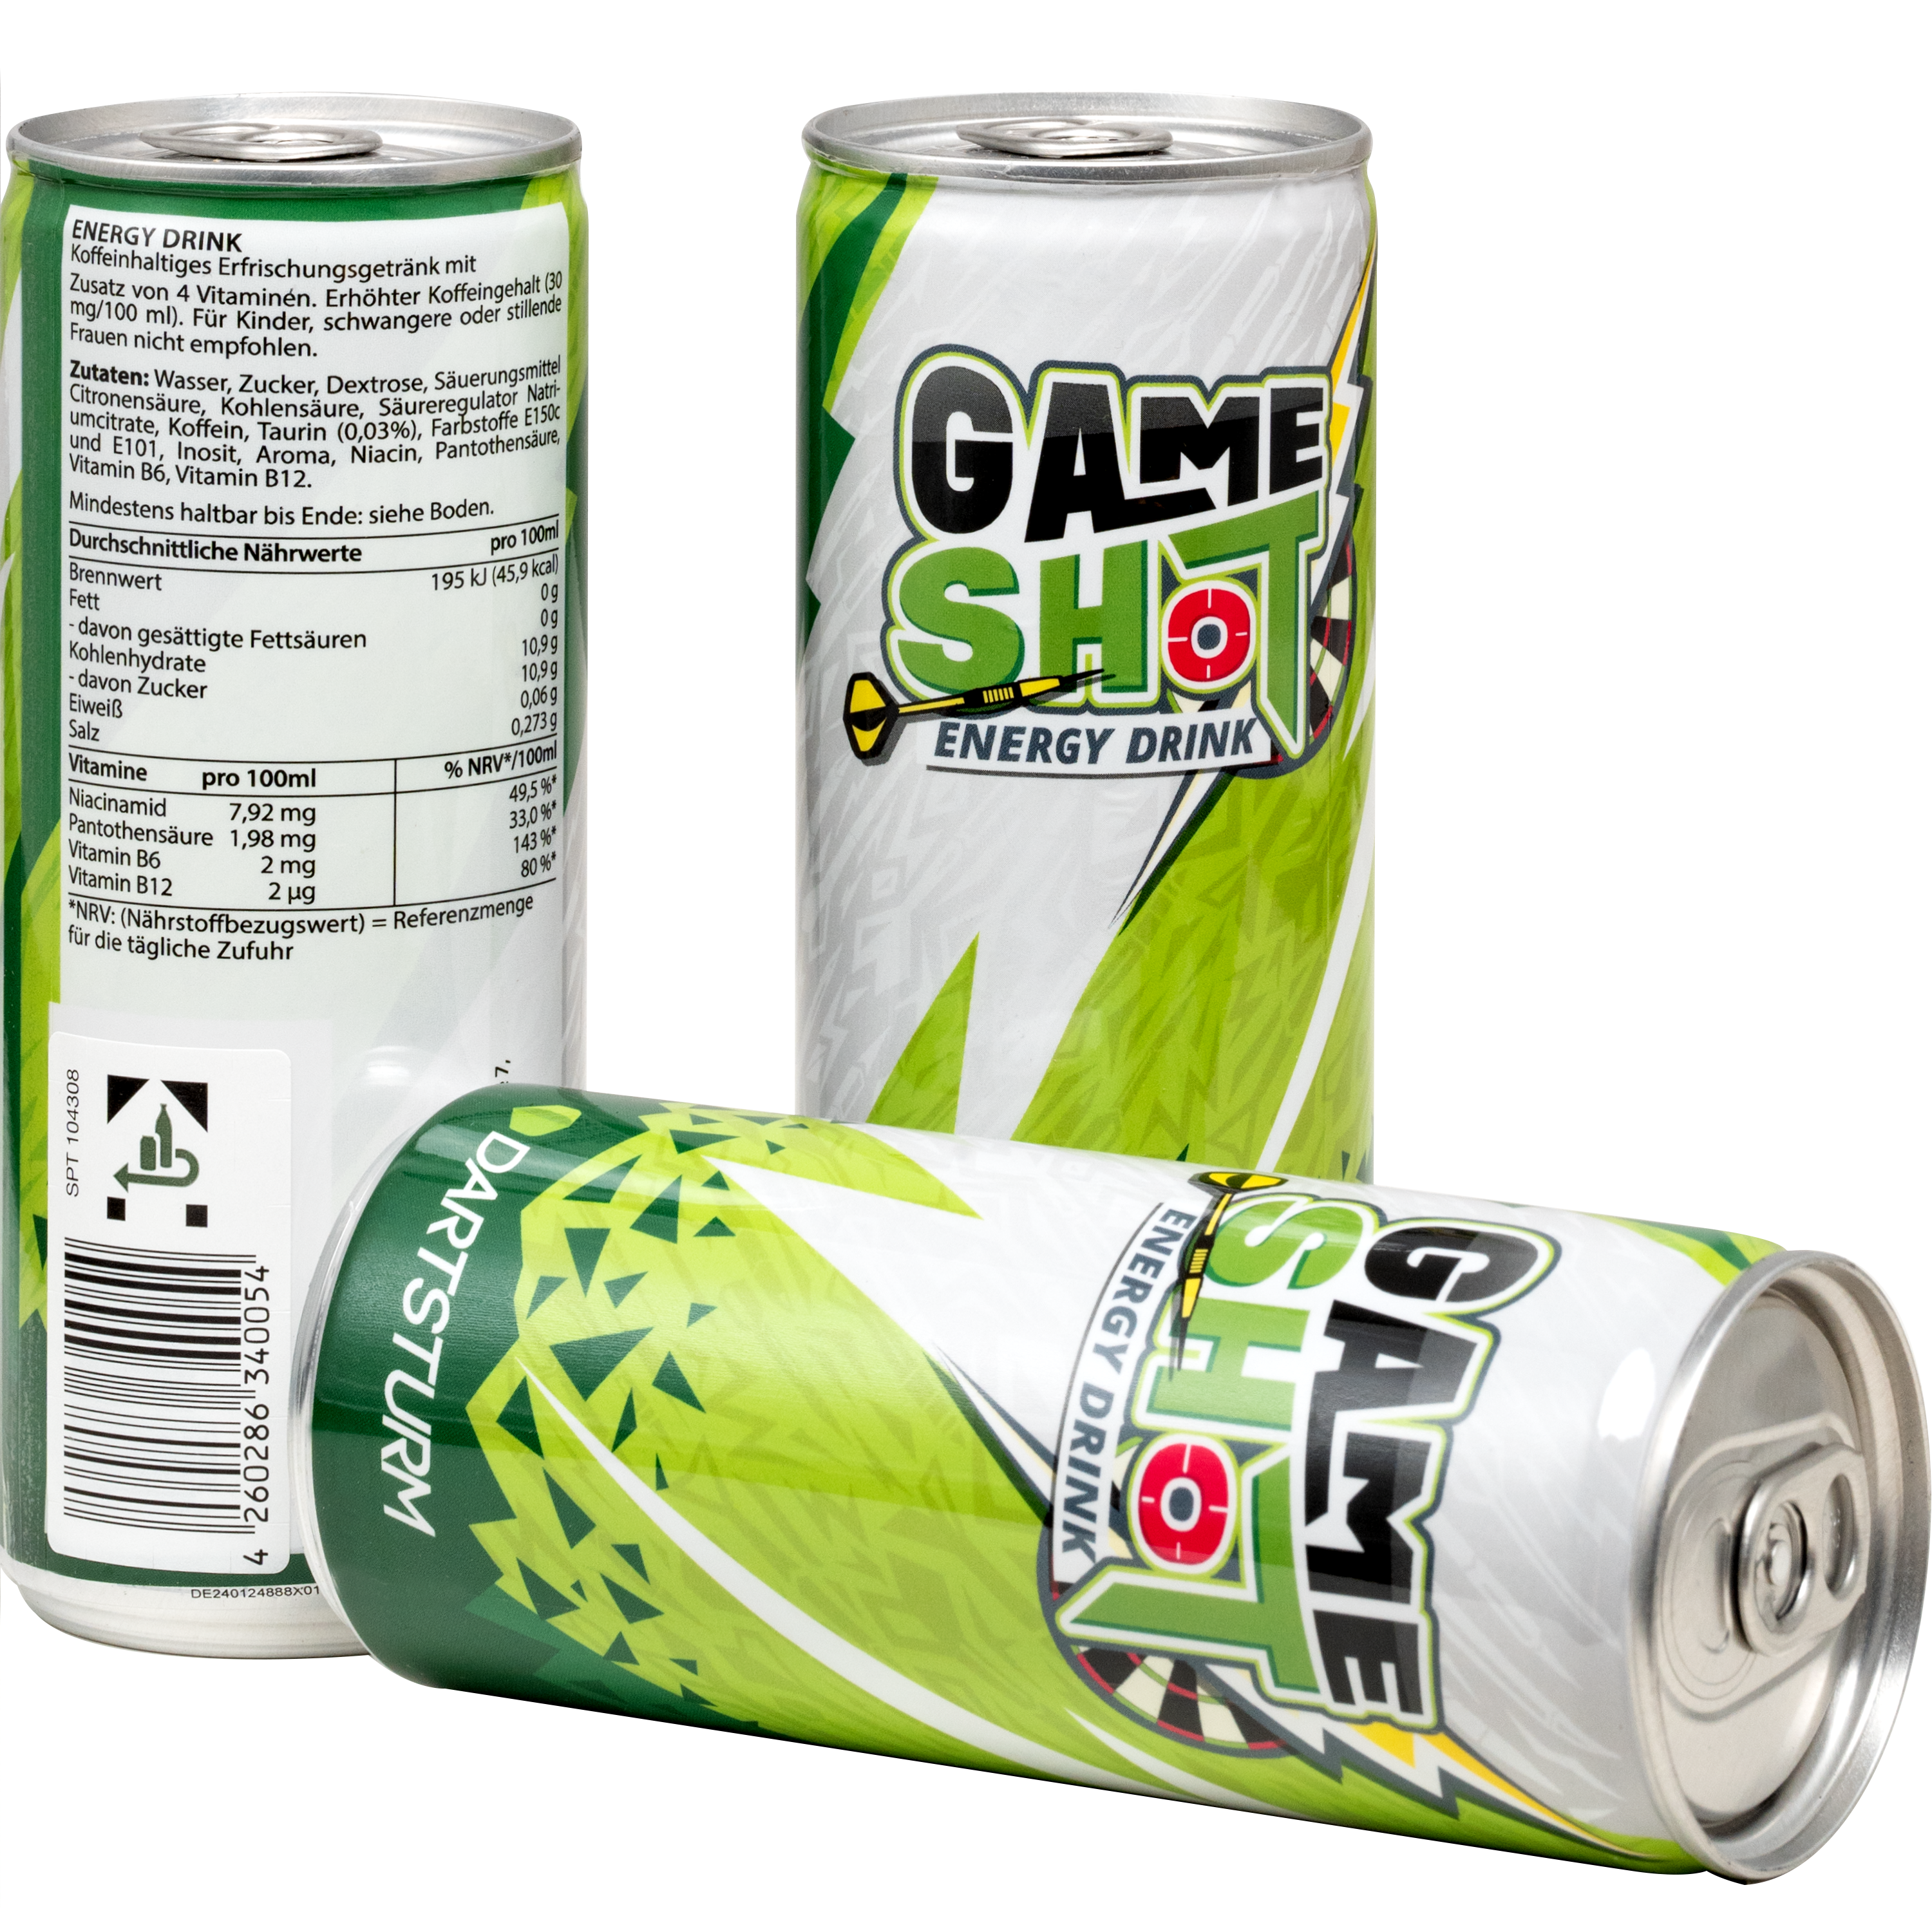 DartSturm - Energy Drink "Game Shot"